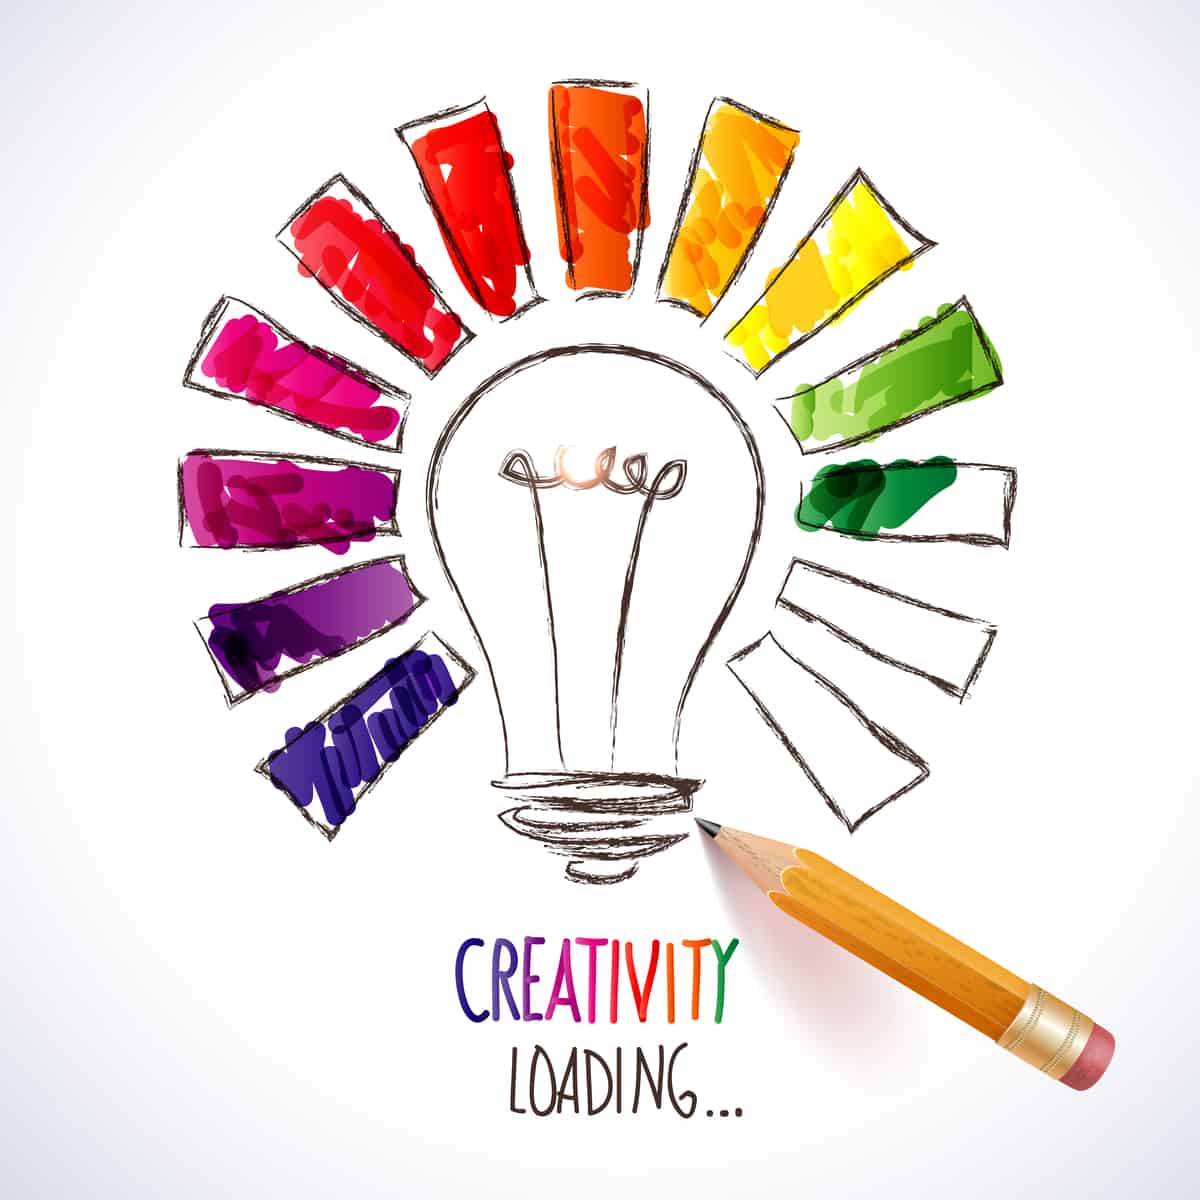 Creativity loading graphic - lightbulb with rainbow colors